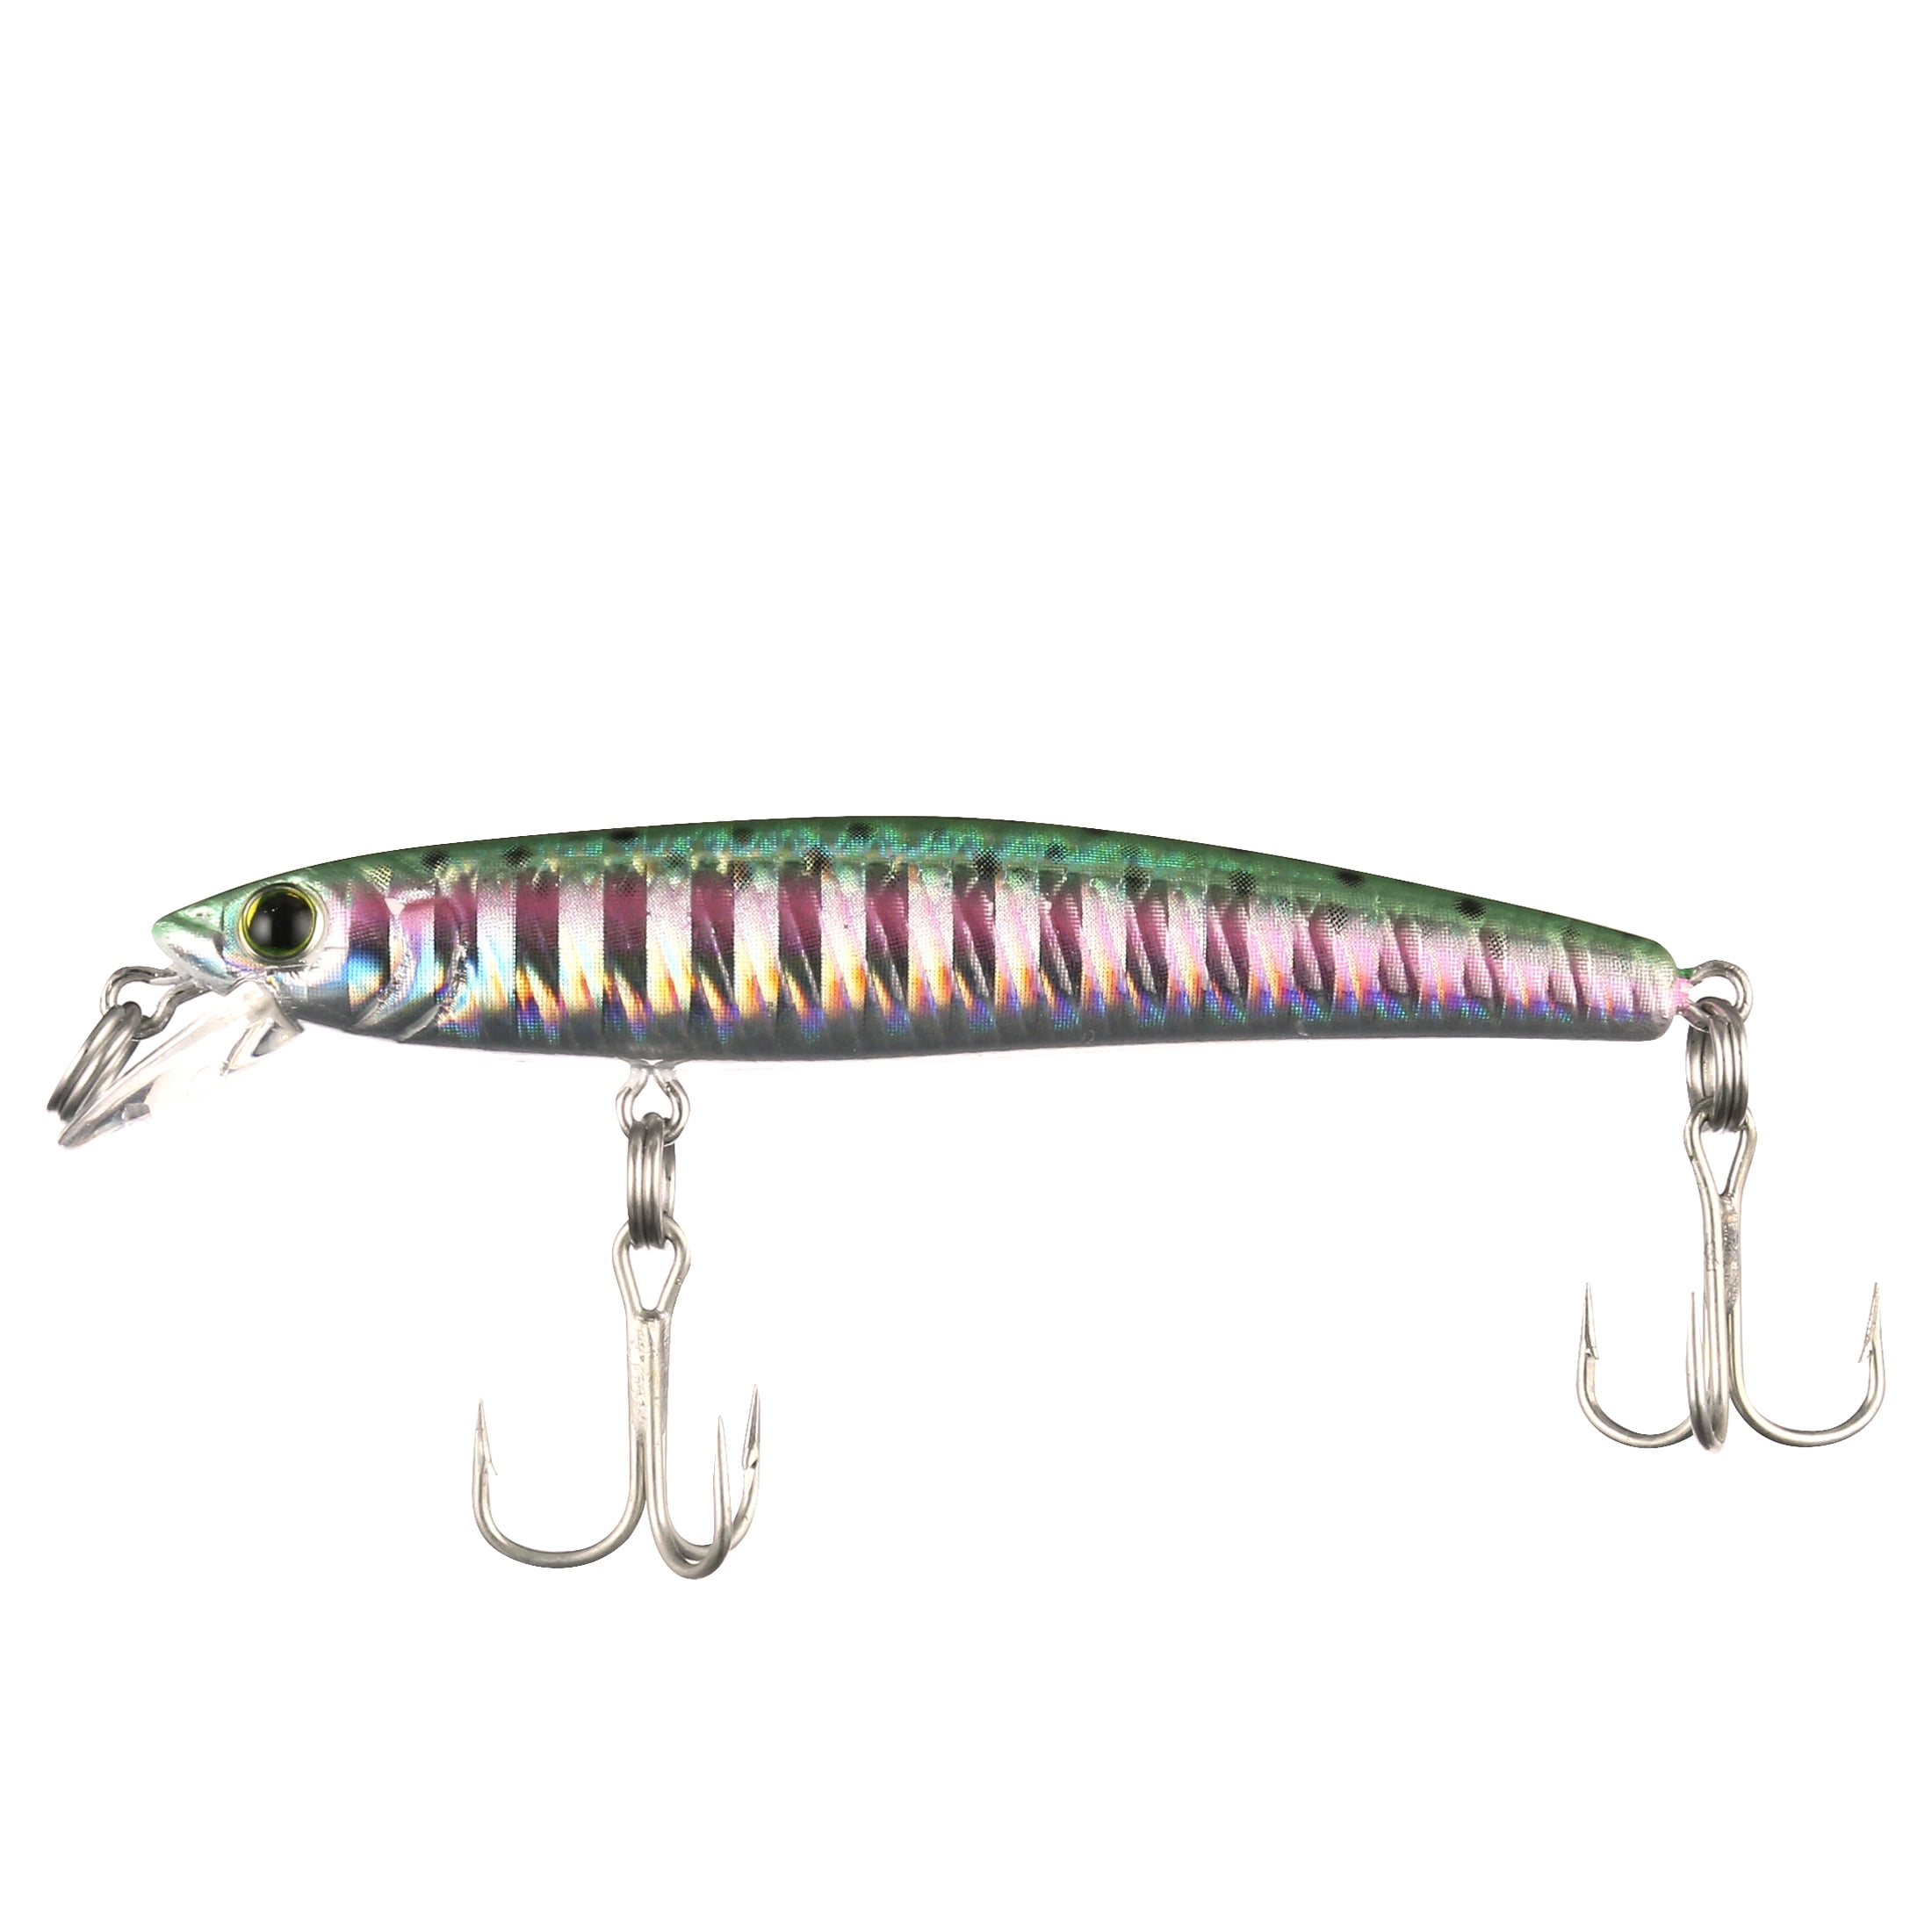 YO-ZURI Hard Lures Pins Minnow Series - Lures crankbaits - FISHING